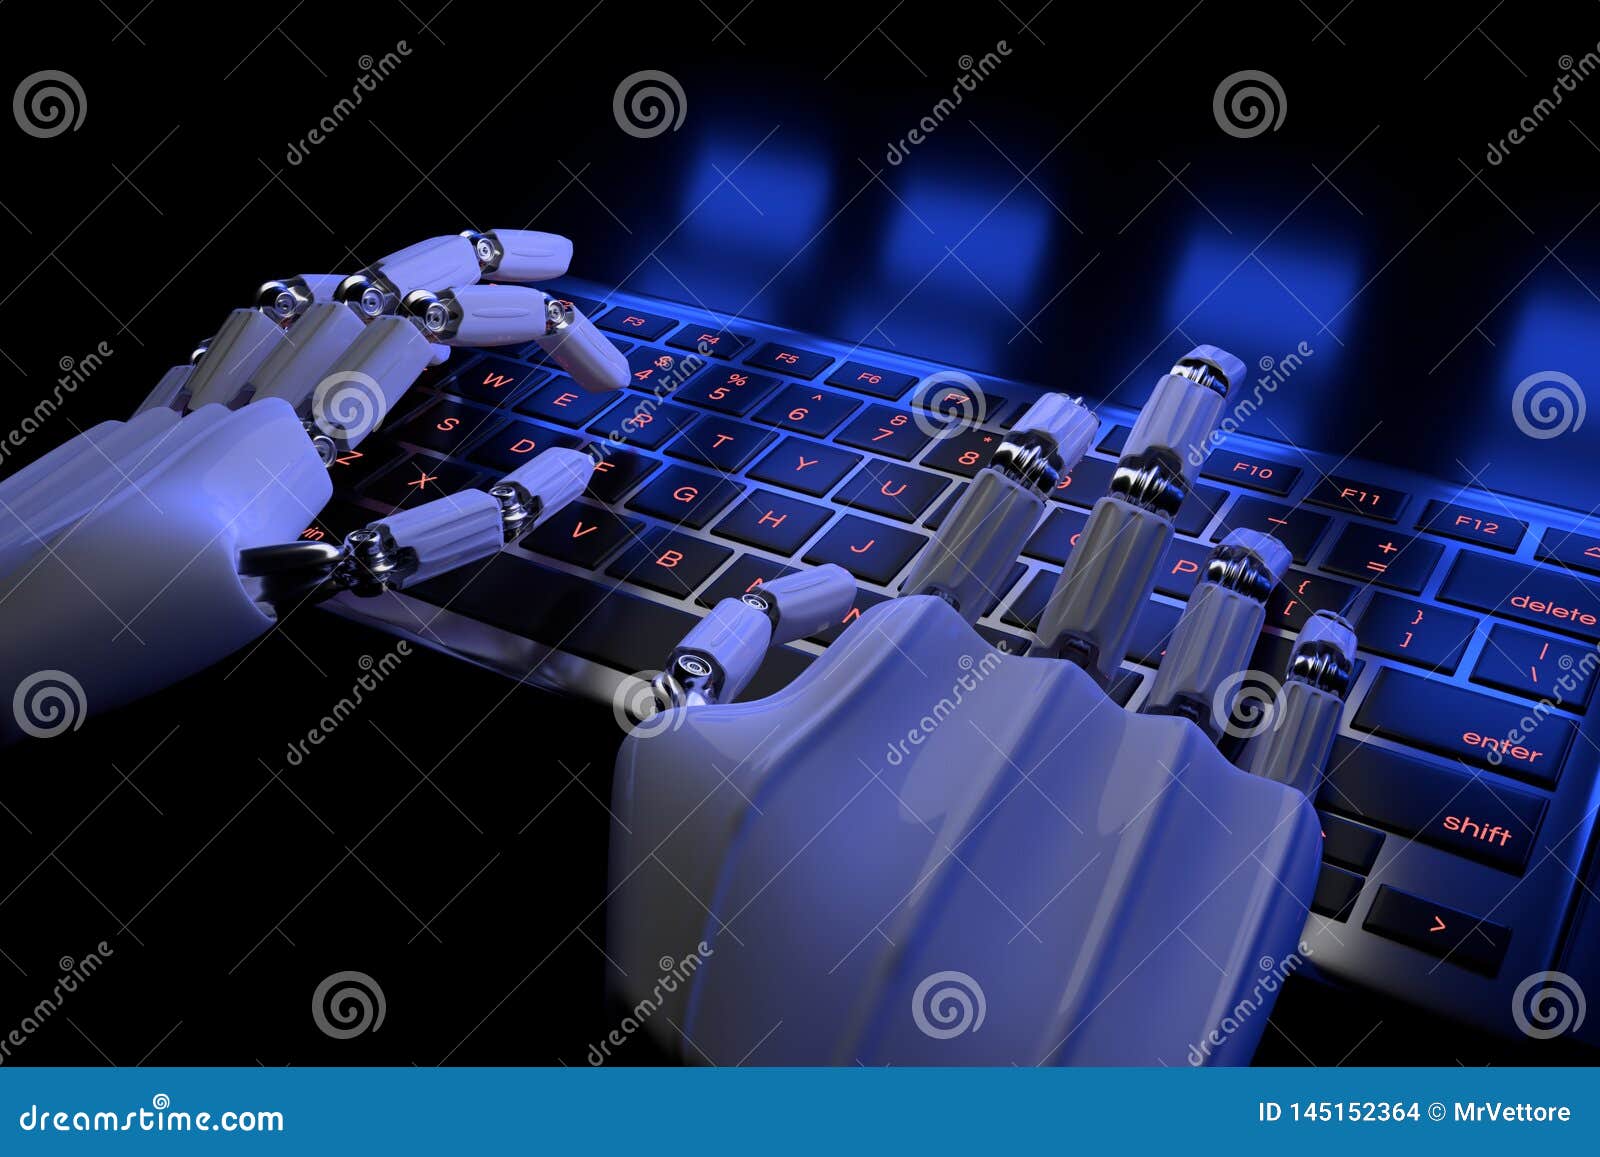 bionic hands typing on keypad, keyboard. robotic arm cyborg using computer. 3d render . bionics technology concept